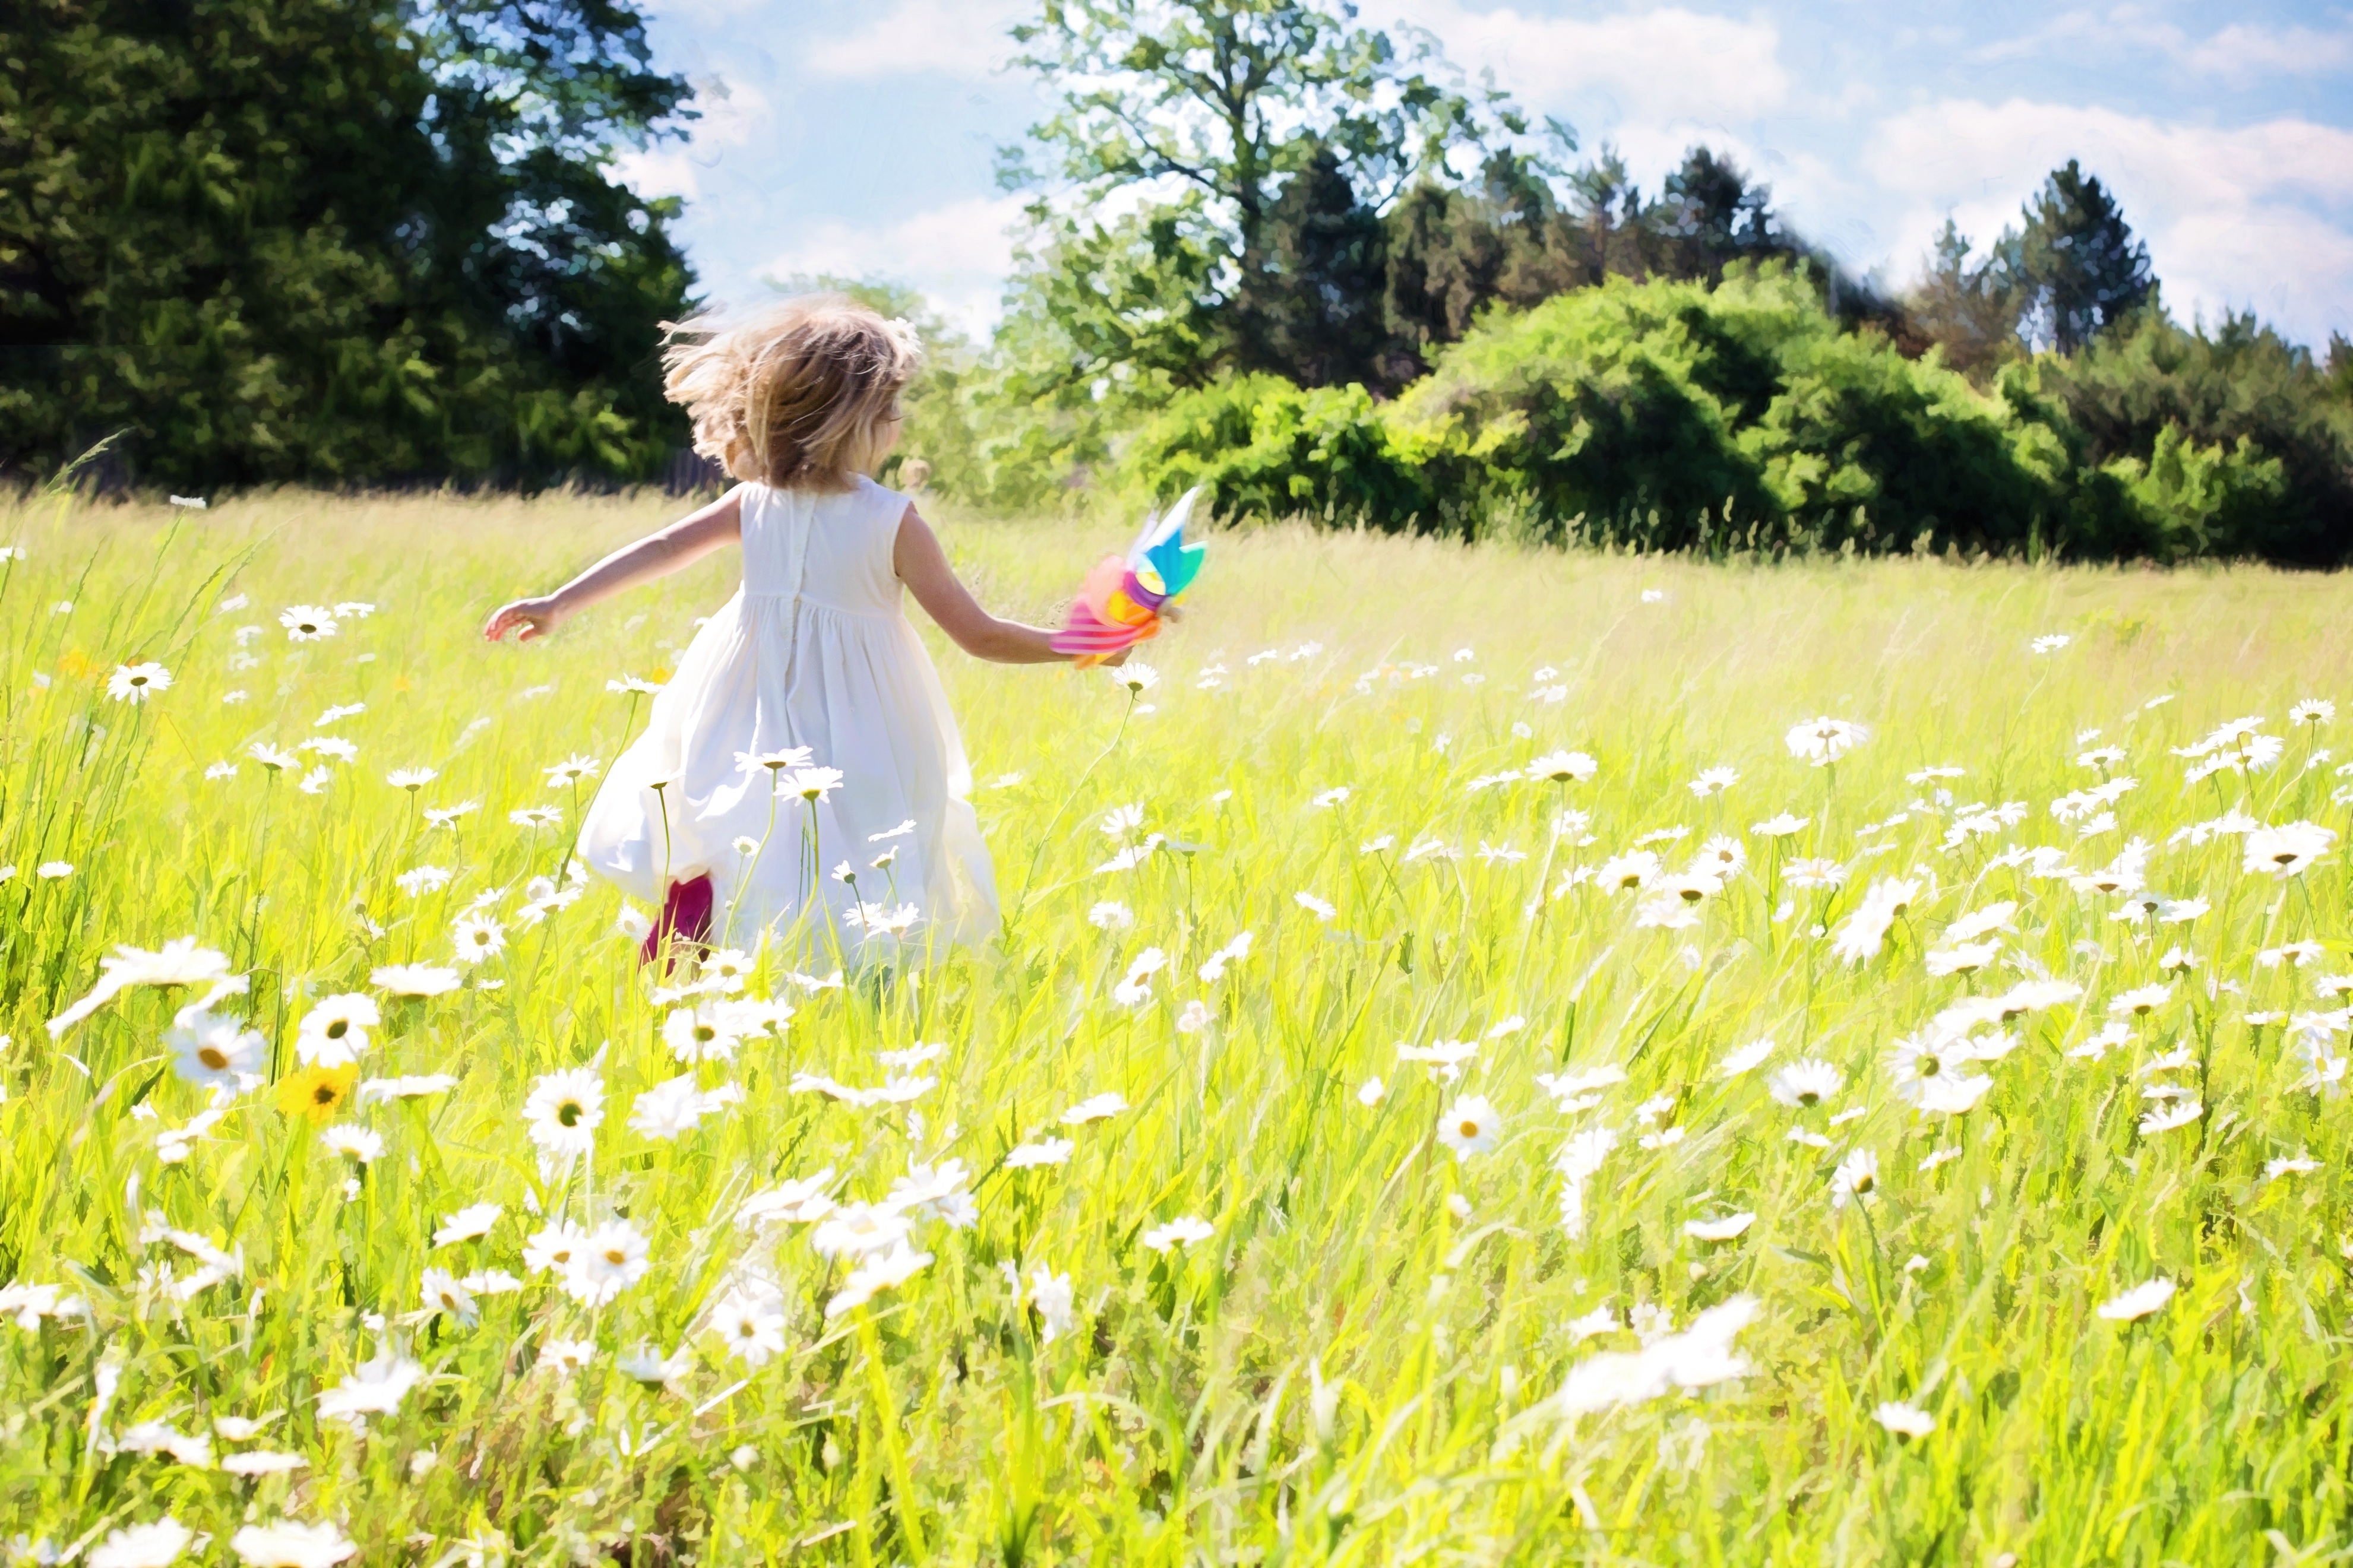 A joyful girl in a white dress running through a field of dandelions